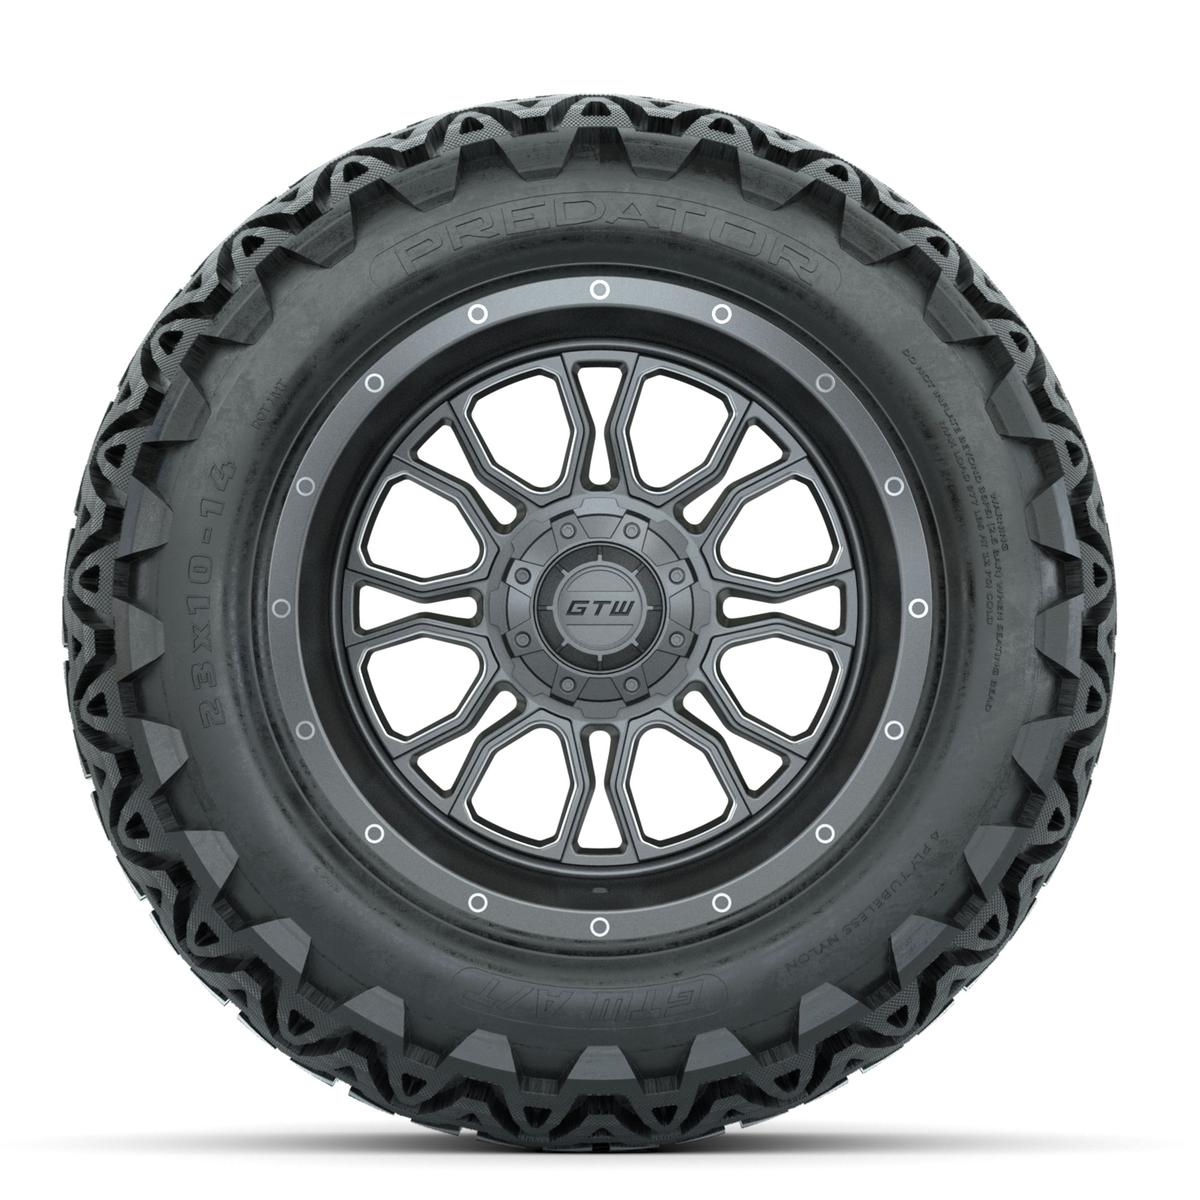 GTW Volt Gunmetal/Machined 14 in Wheels with 23x10-14 Predator All-Terrain Tires – Full Set